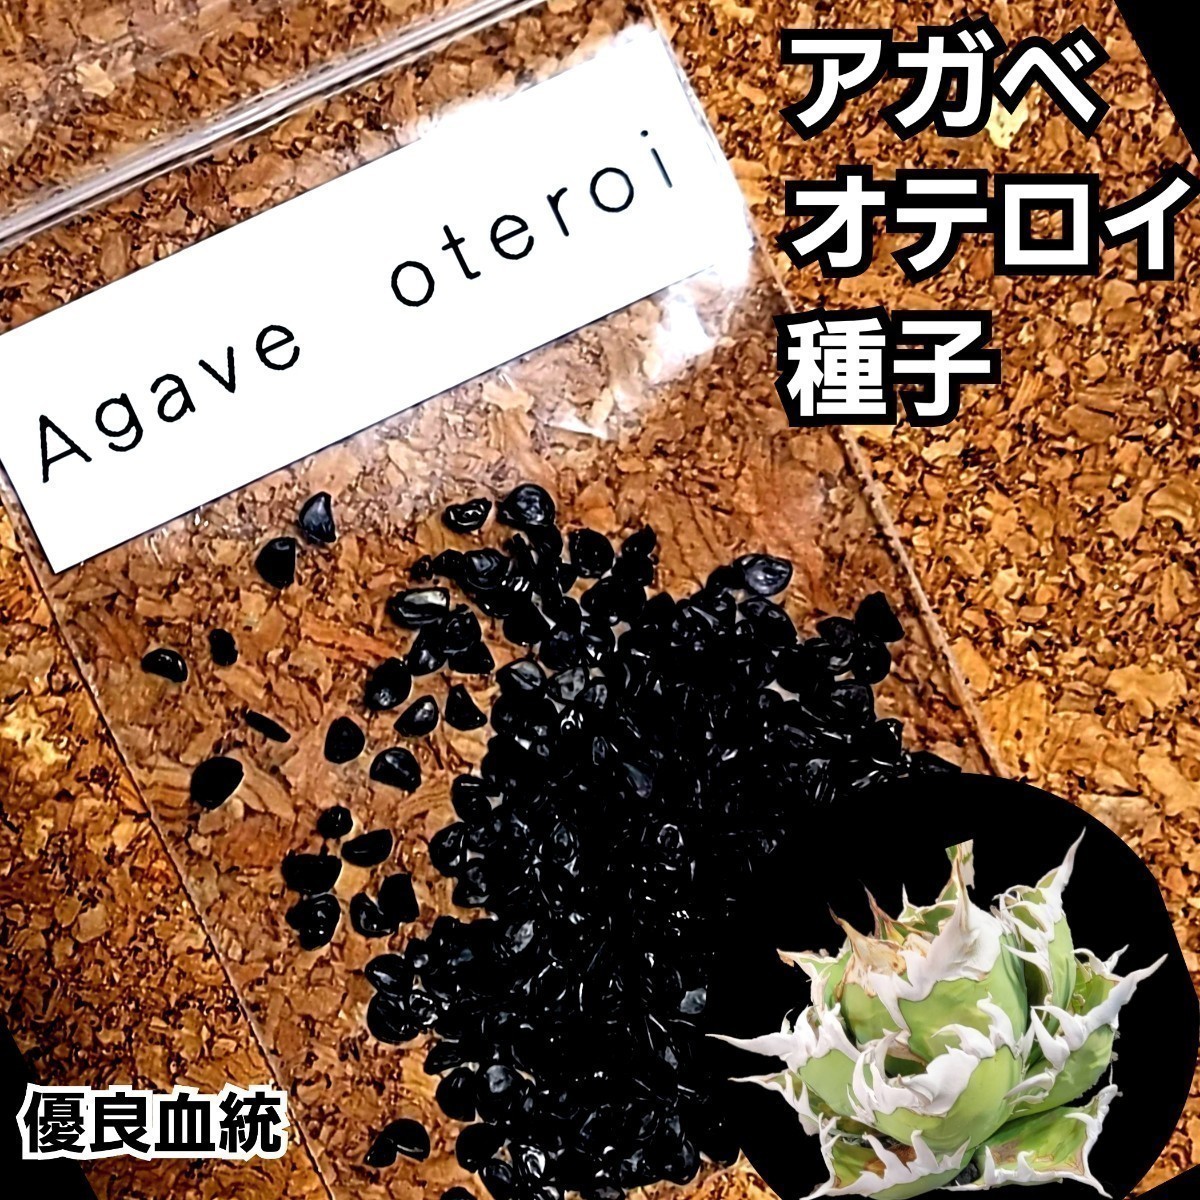 Agave oteroiseed　from Oaxaca Mexico　種子【10粒】良血統厳選　　鮮度の良い種ですので発芽率も高い！是非、実生にチャレンジください_画像5